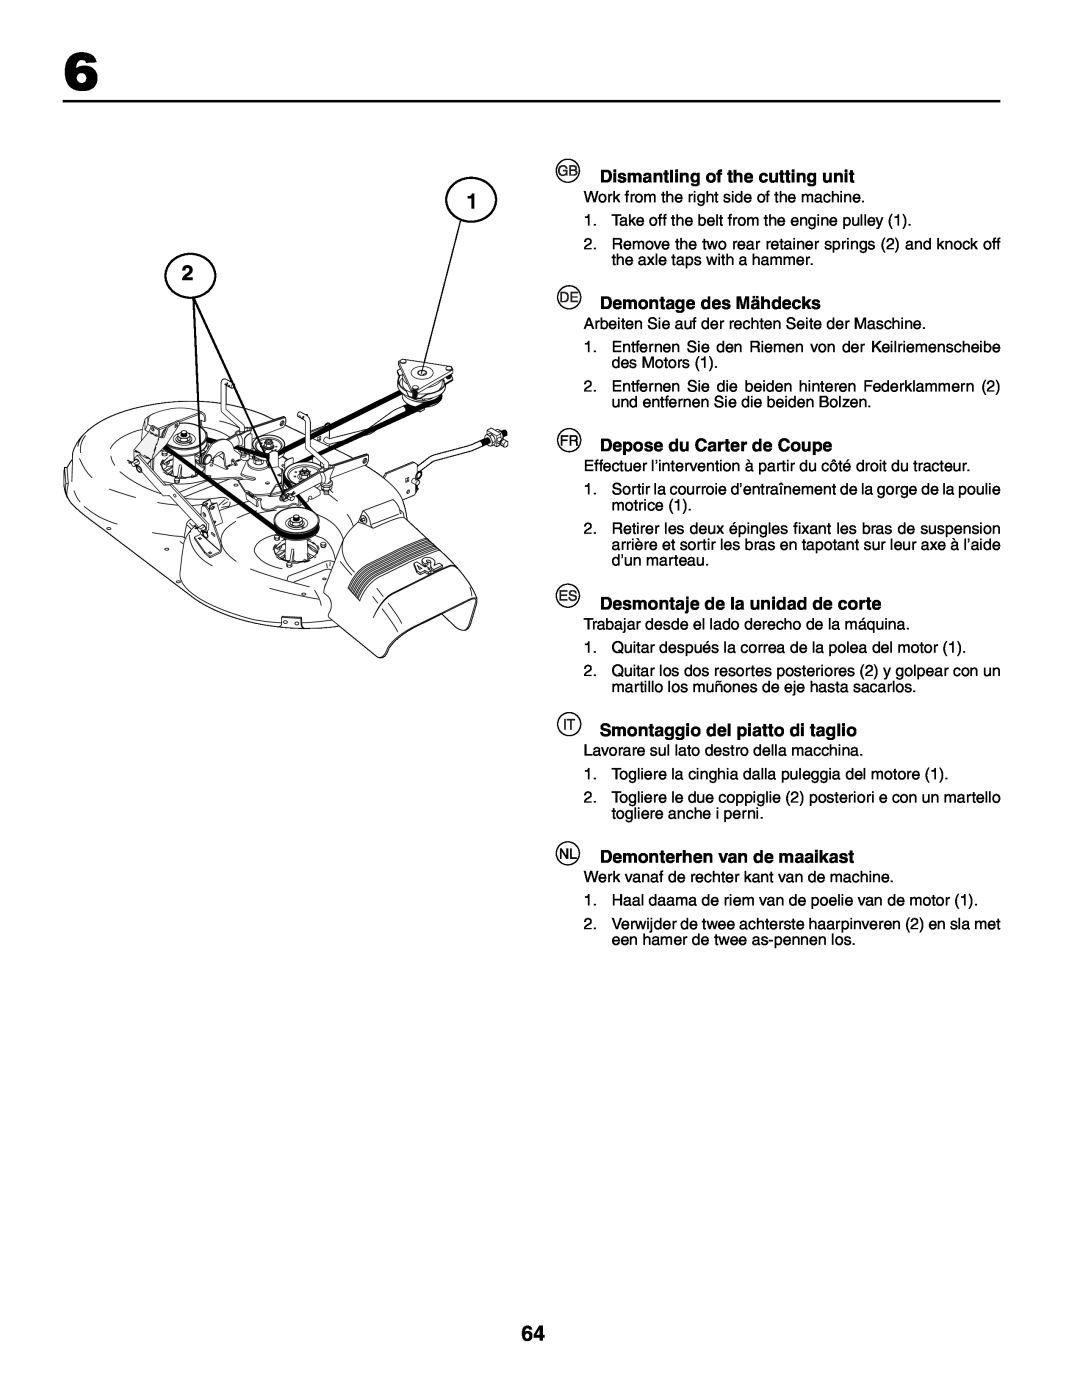 Husqvarna YTH210XP instruction manual Dismantling of the cutting unit, Demontage des Mähdecks, Depose du Carter de Coupe 